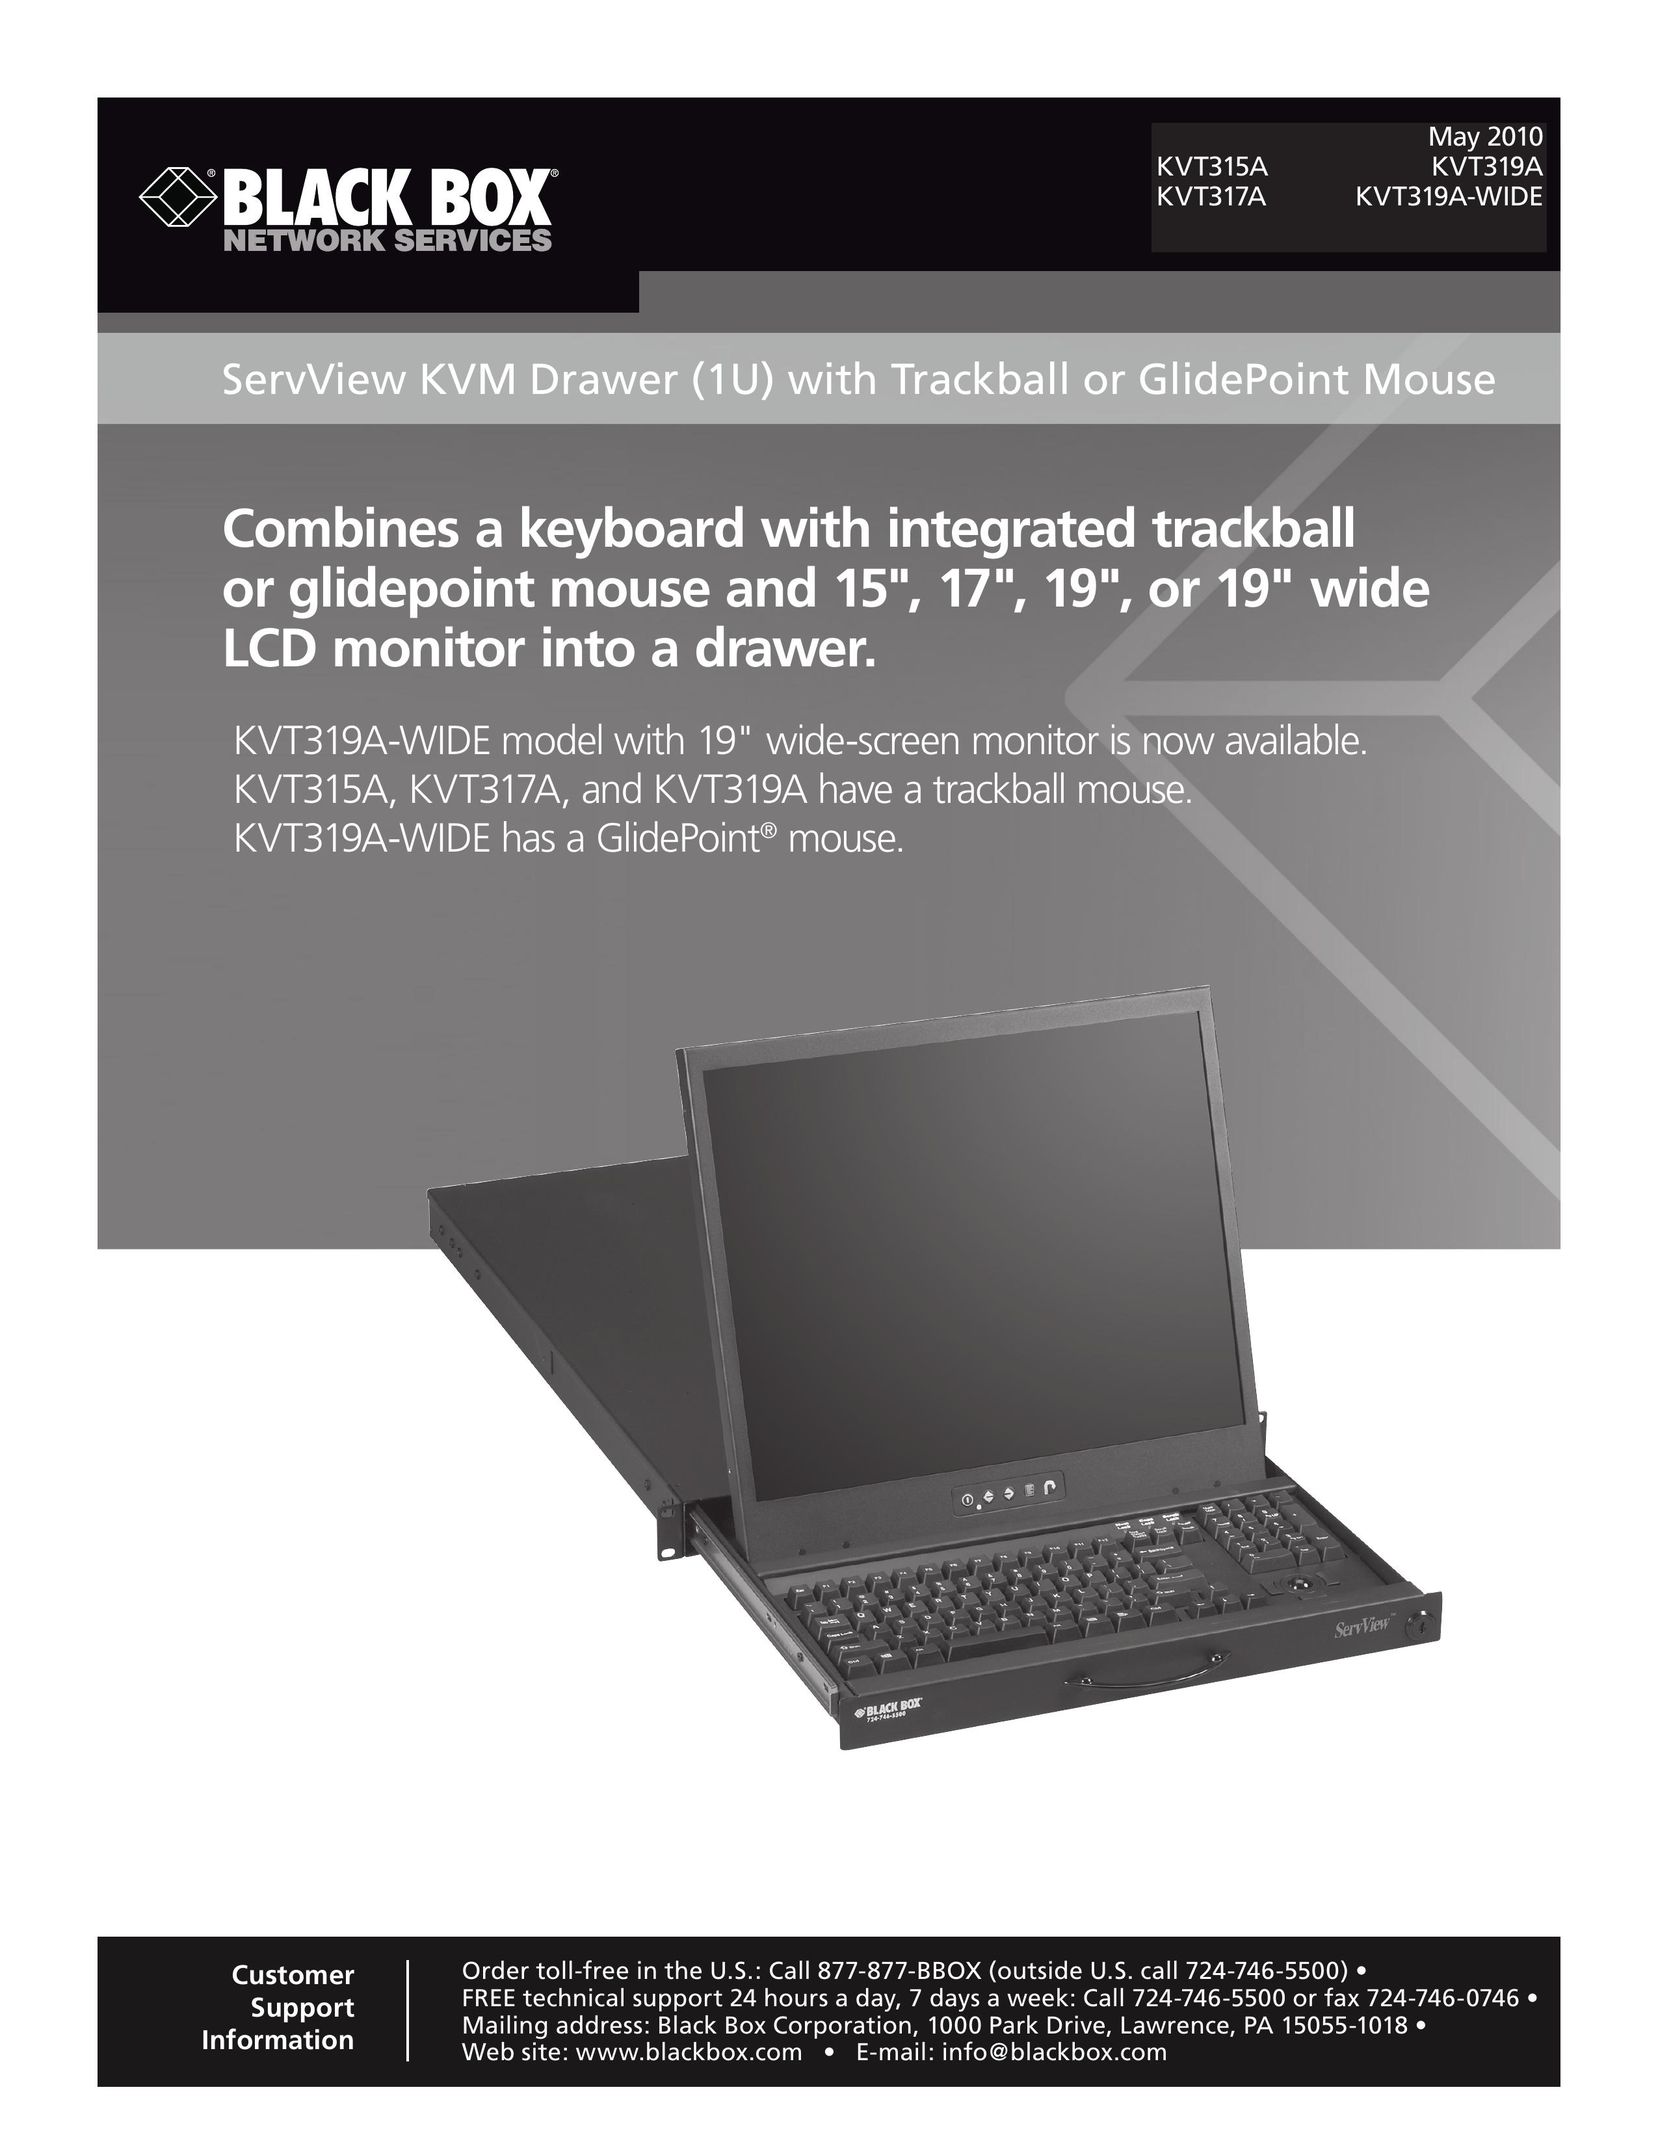 Black Box KVT317A Personal Computer User Manual